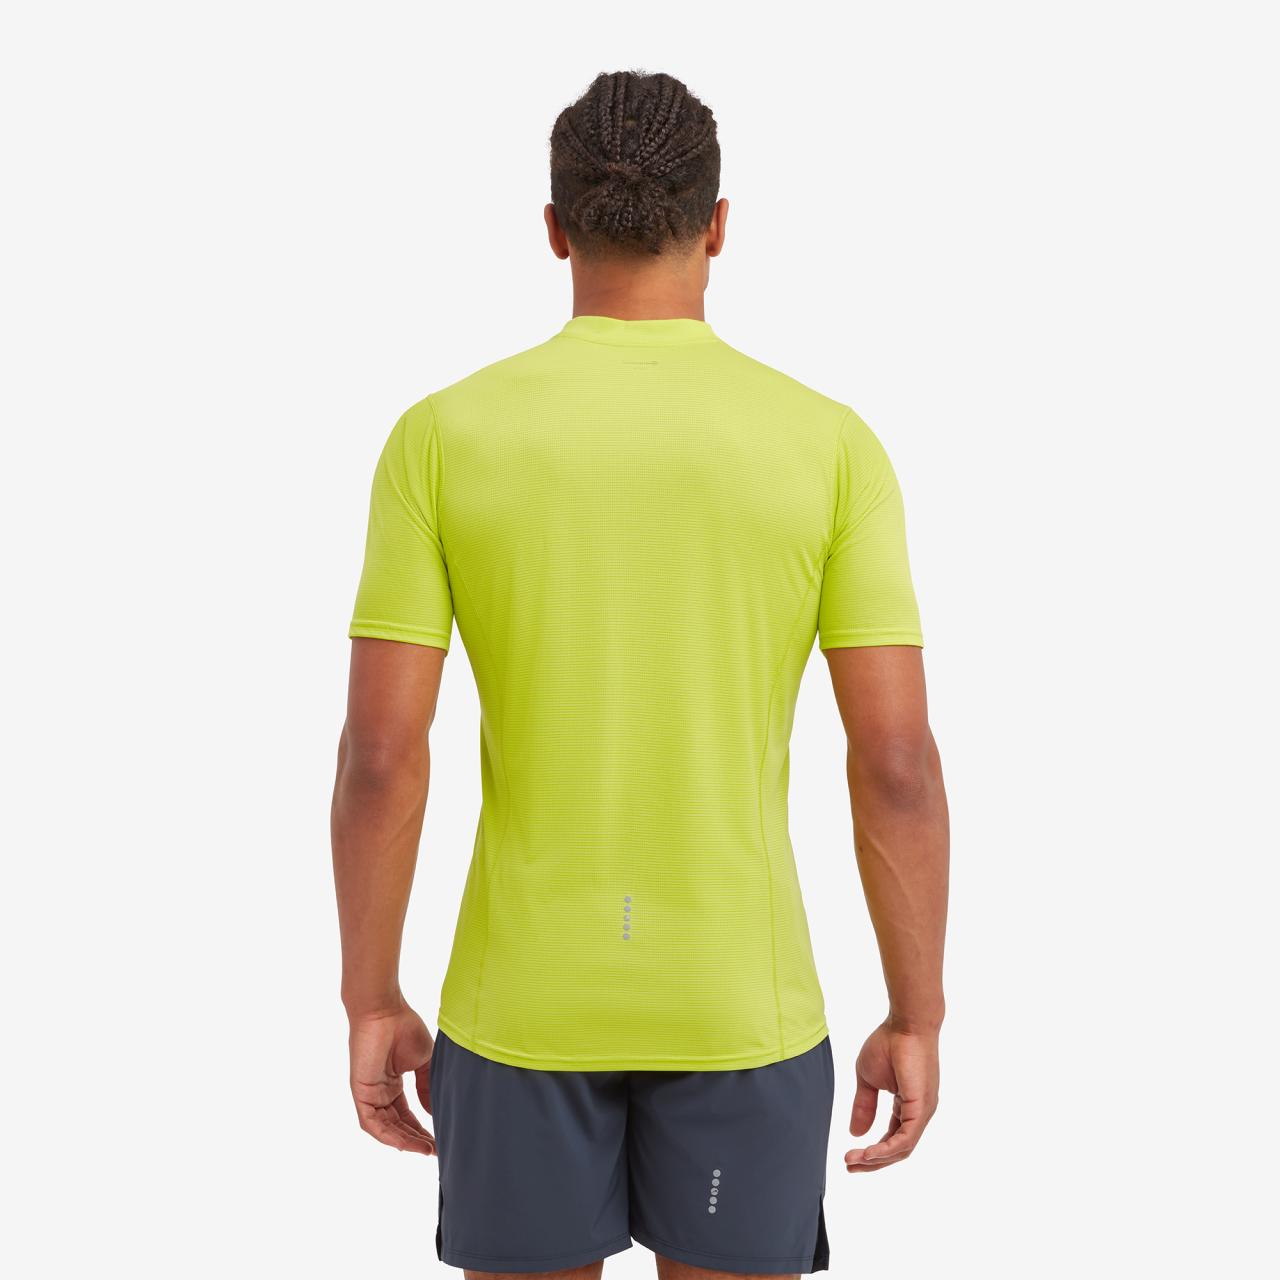 DART NANO ZIP T-SHIRT-CITRUS SPRING-L pánské triko žlutozelené